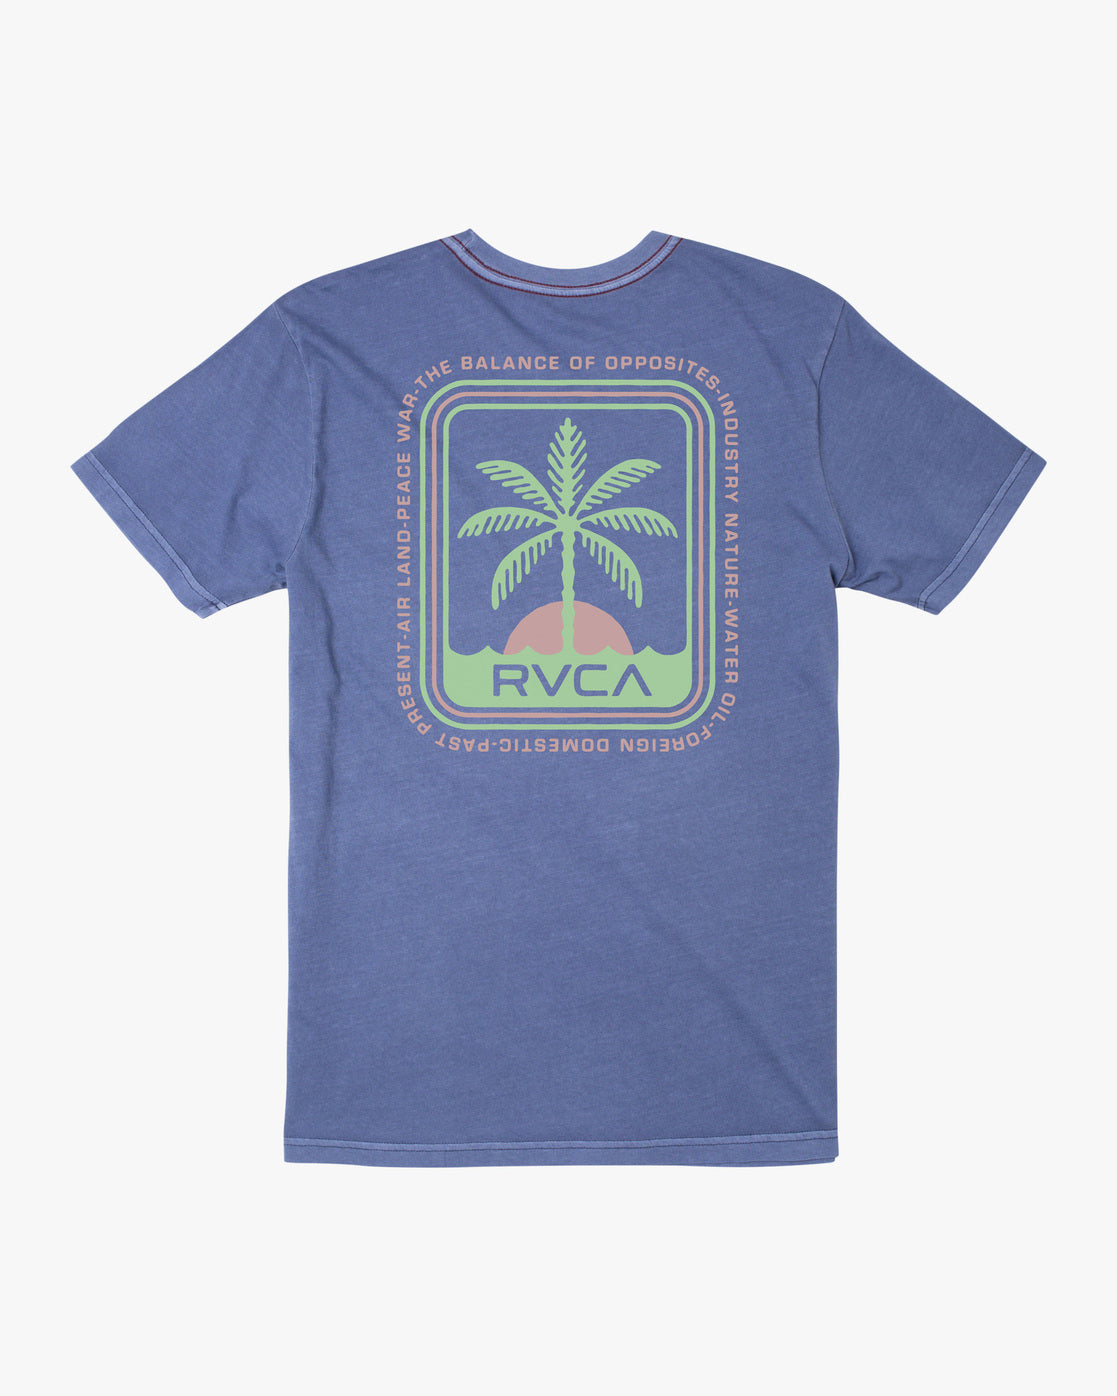 RVCA Palm Beach Tee - Royal